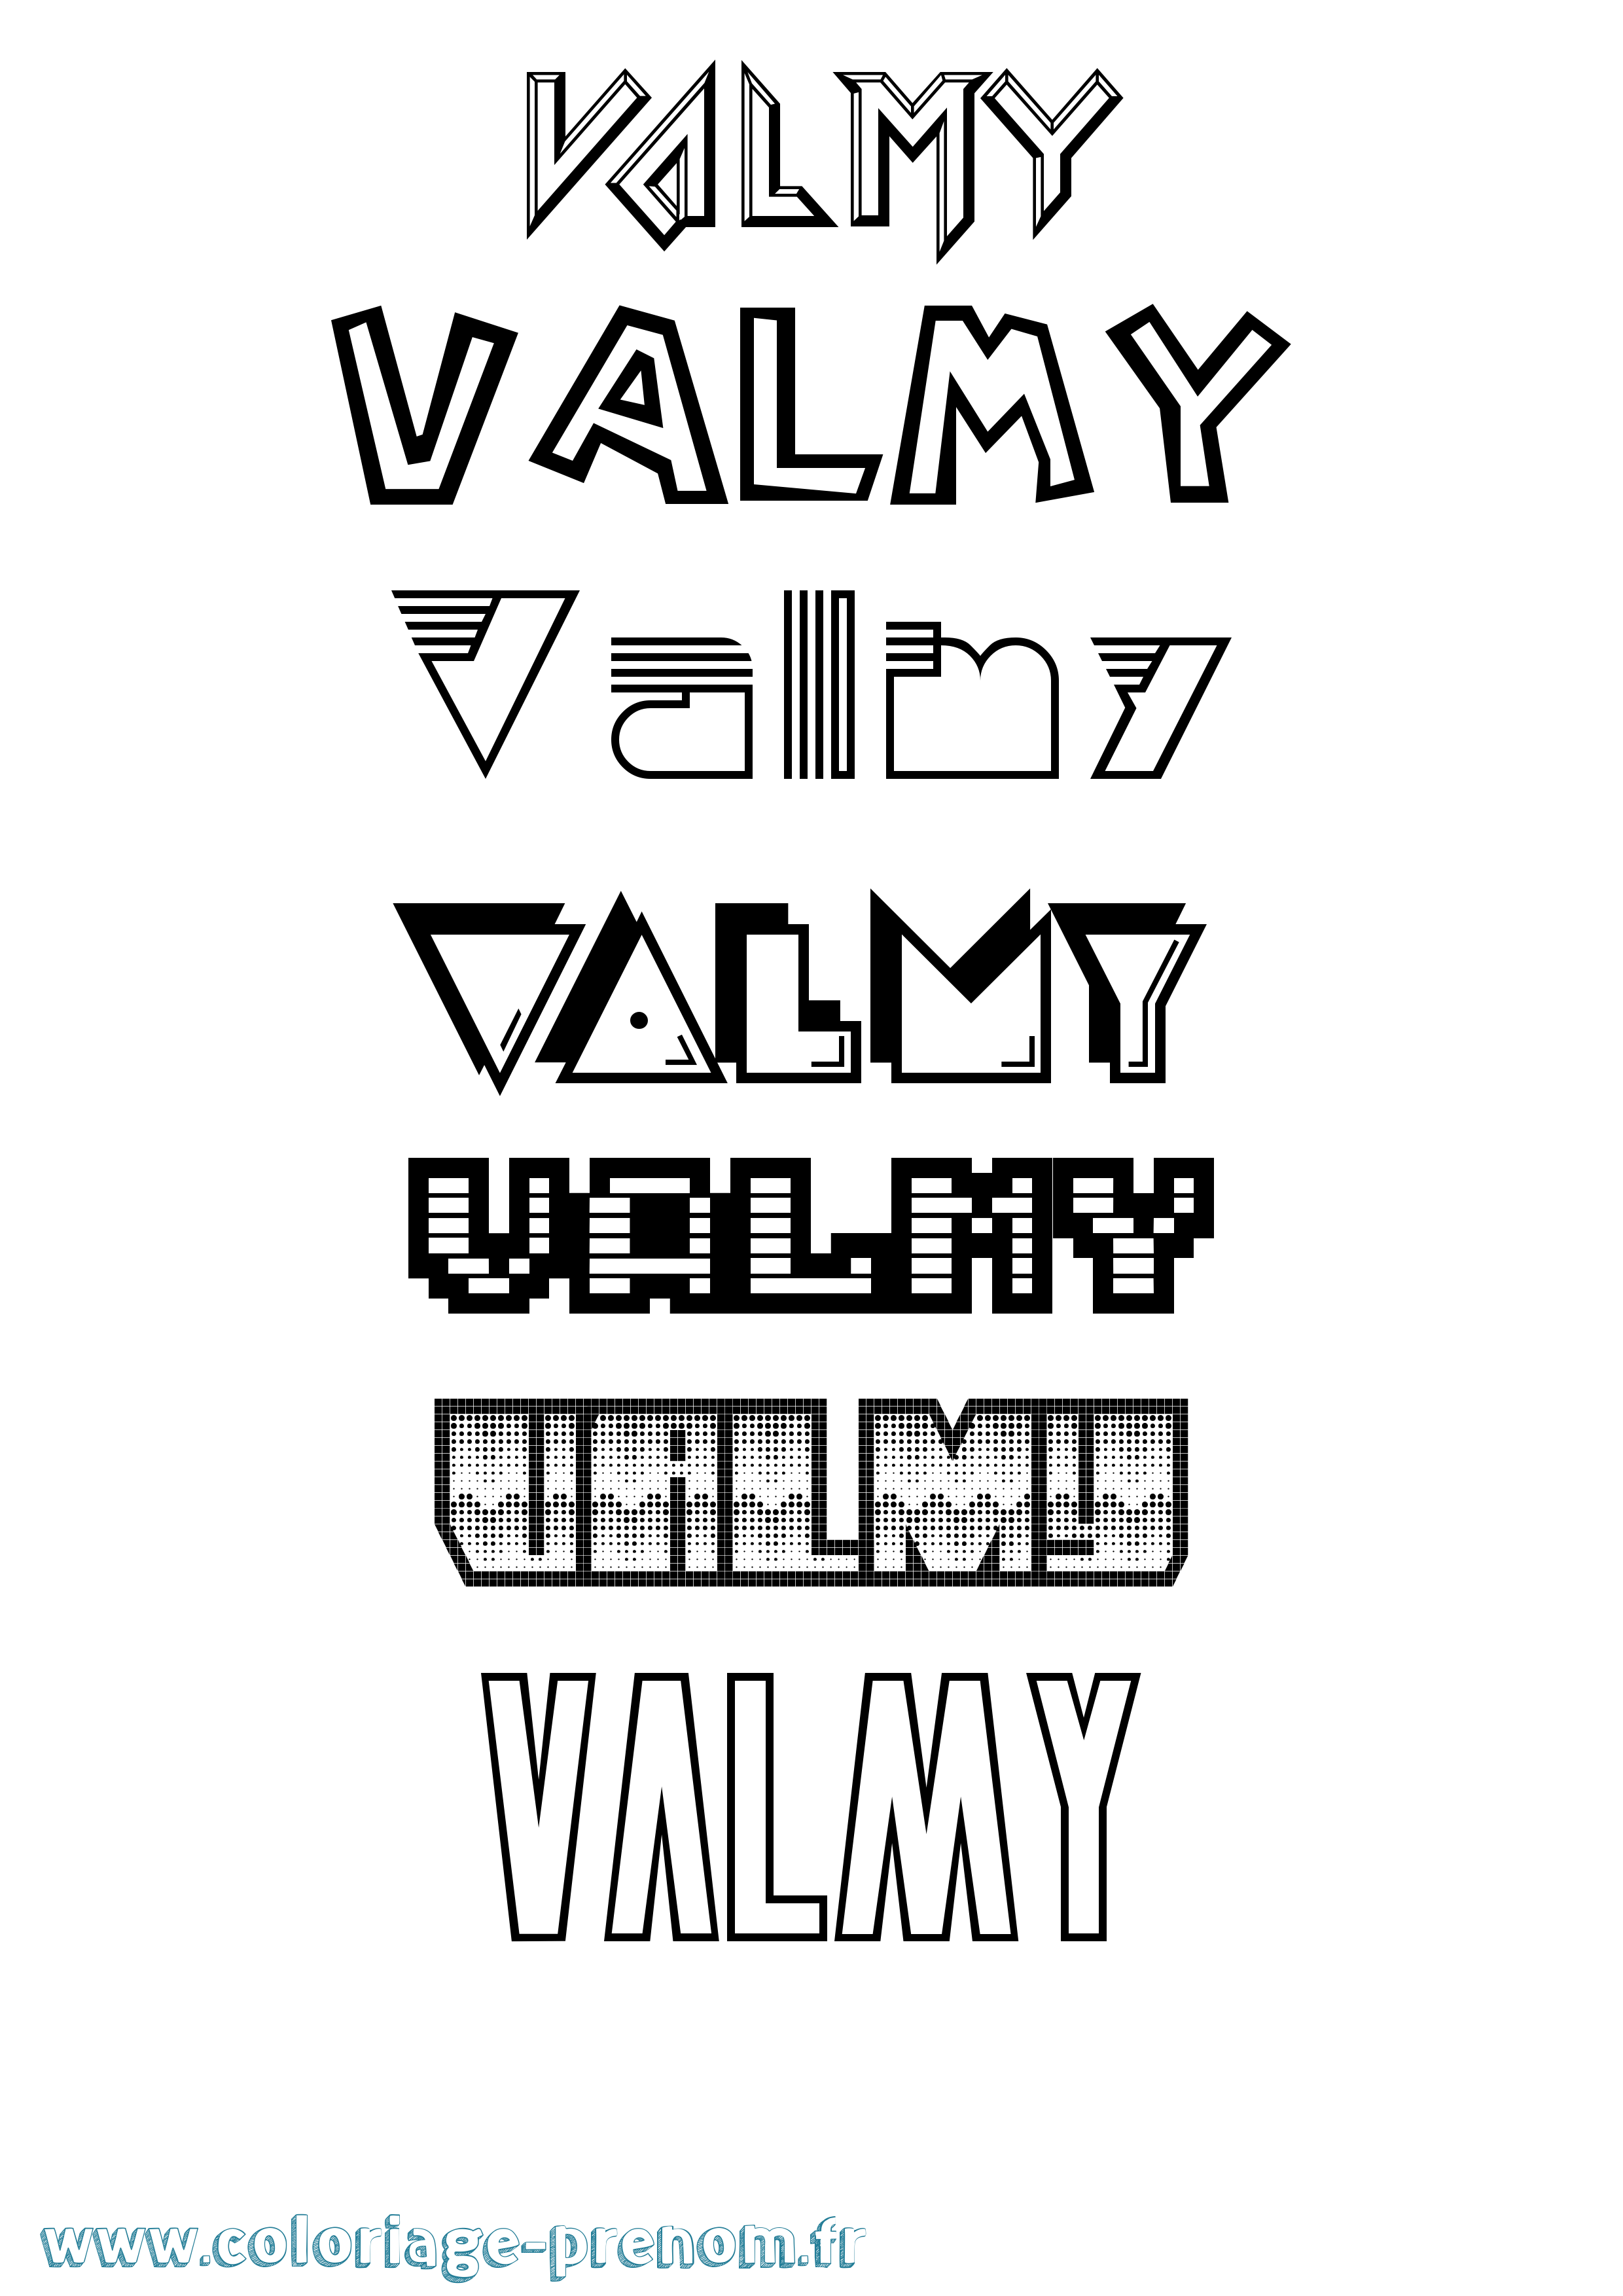 Coloriage prénom Valmy Jeux Vidéos